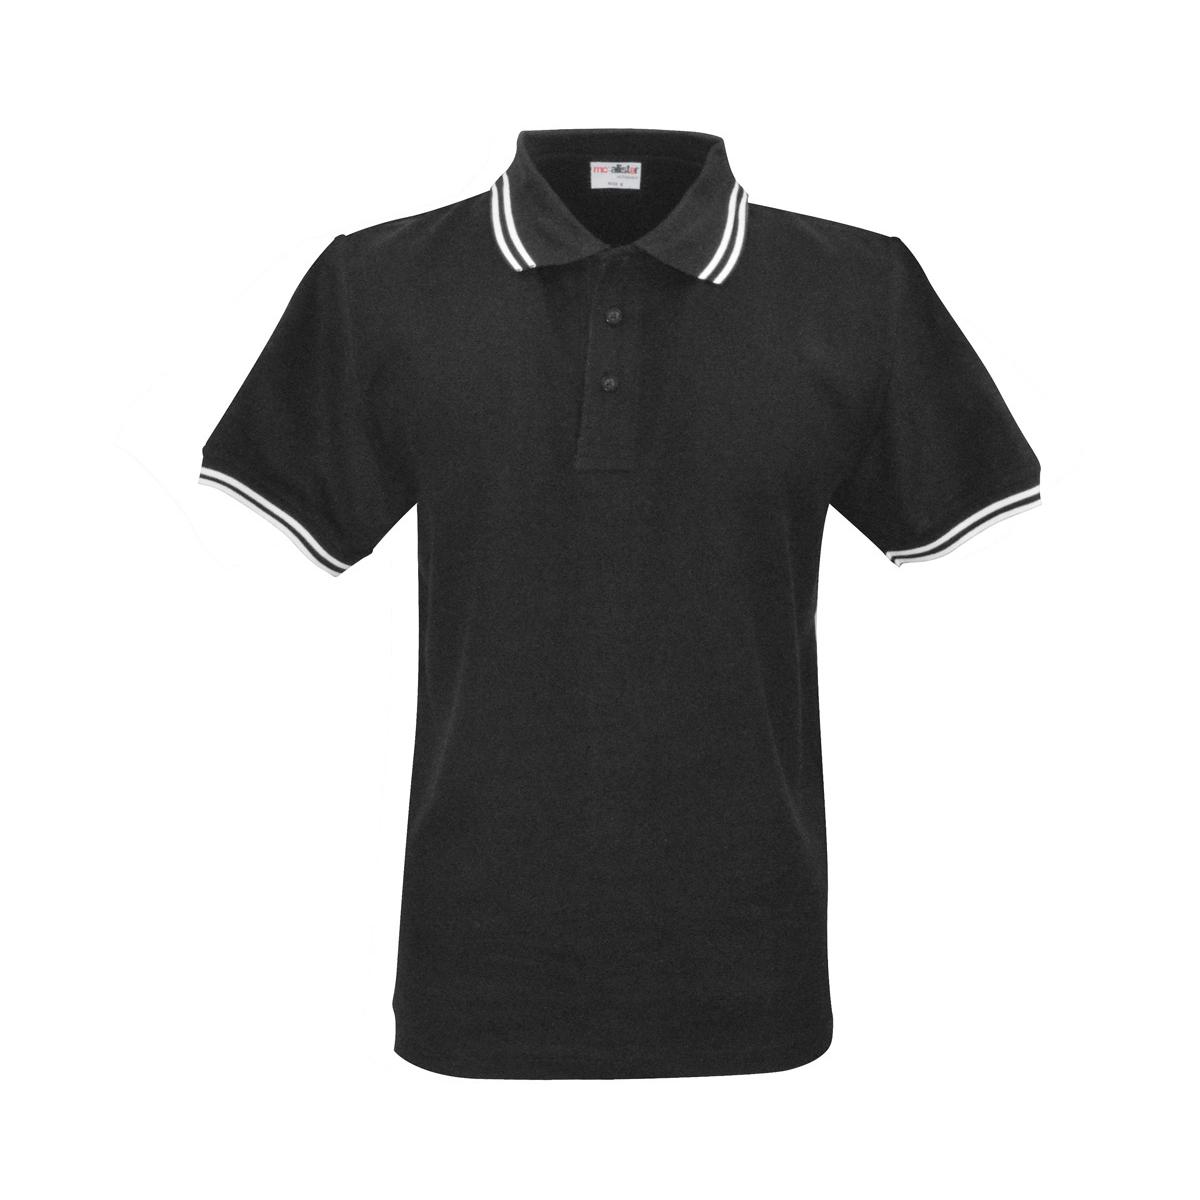 Active Wear - Männer Polo-Shirt - schwarz - weiß